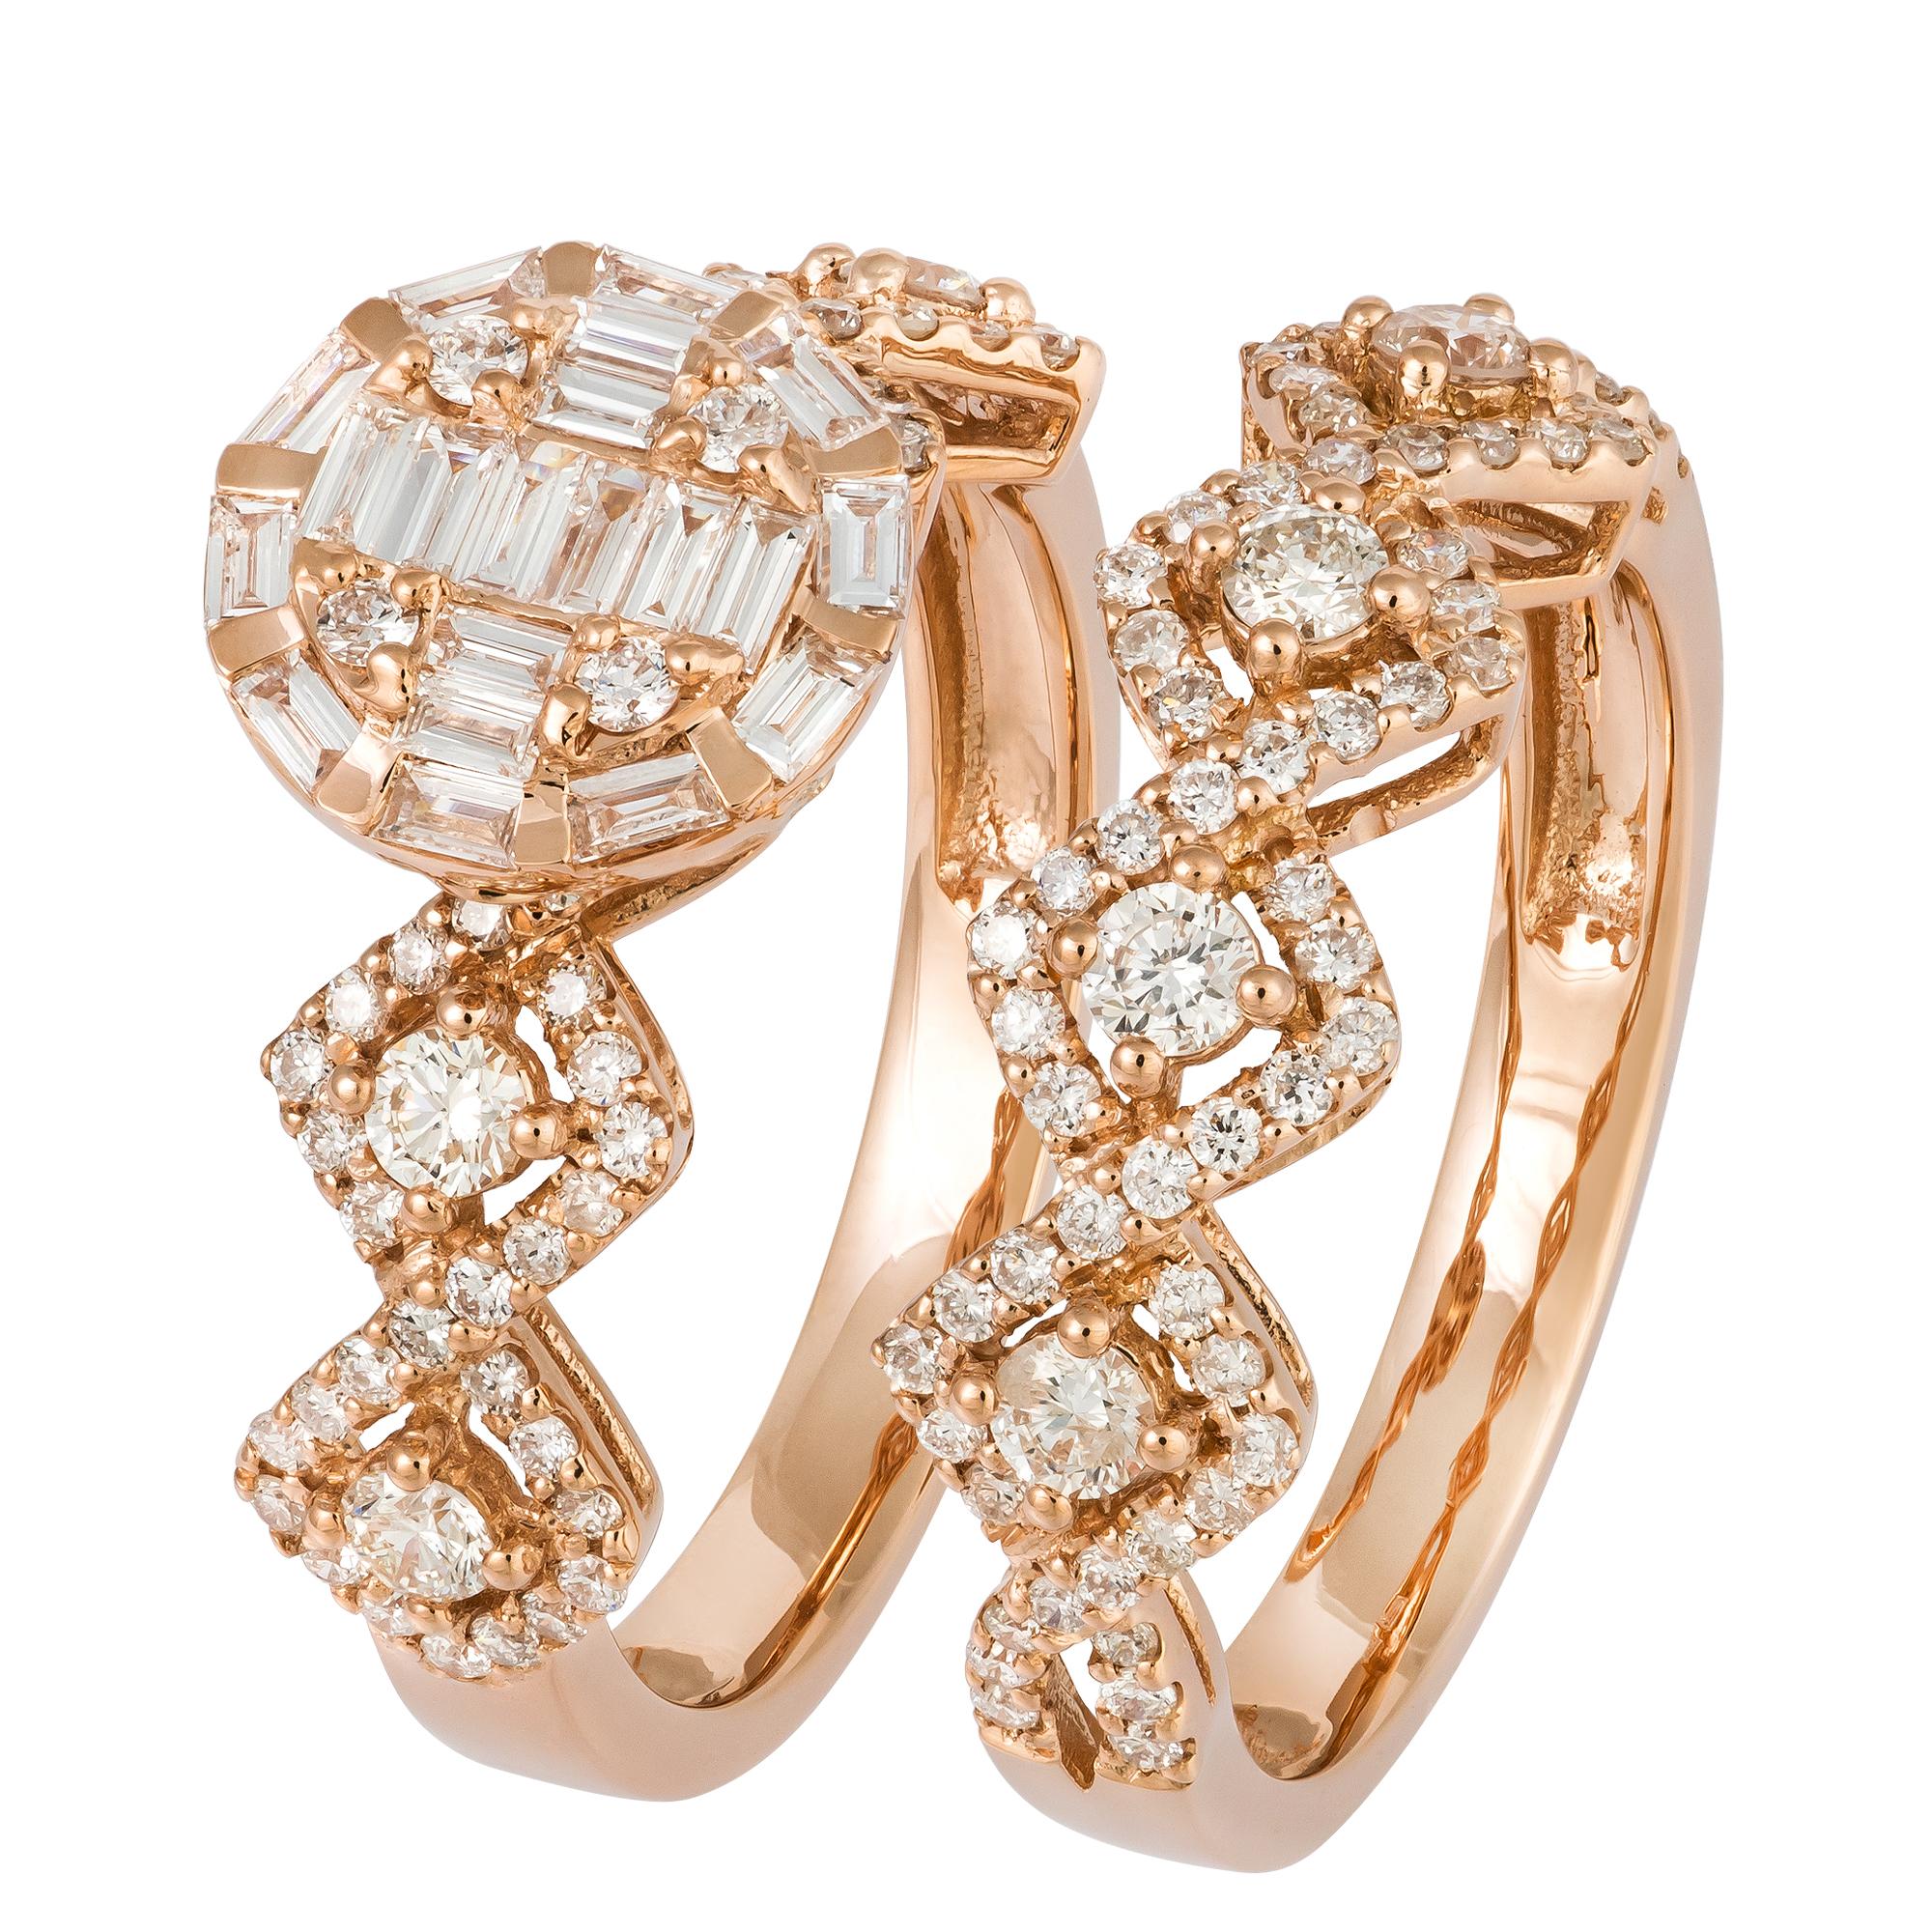 For Sale:  Impressive Pink 18K Gold White Diamond Ring For Her 4